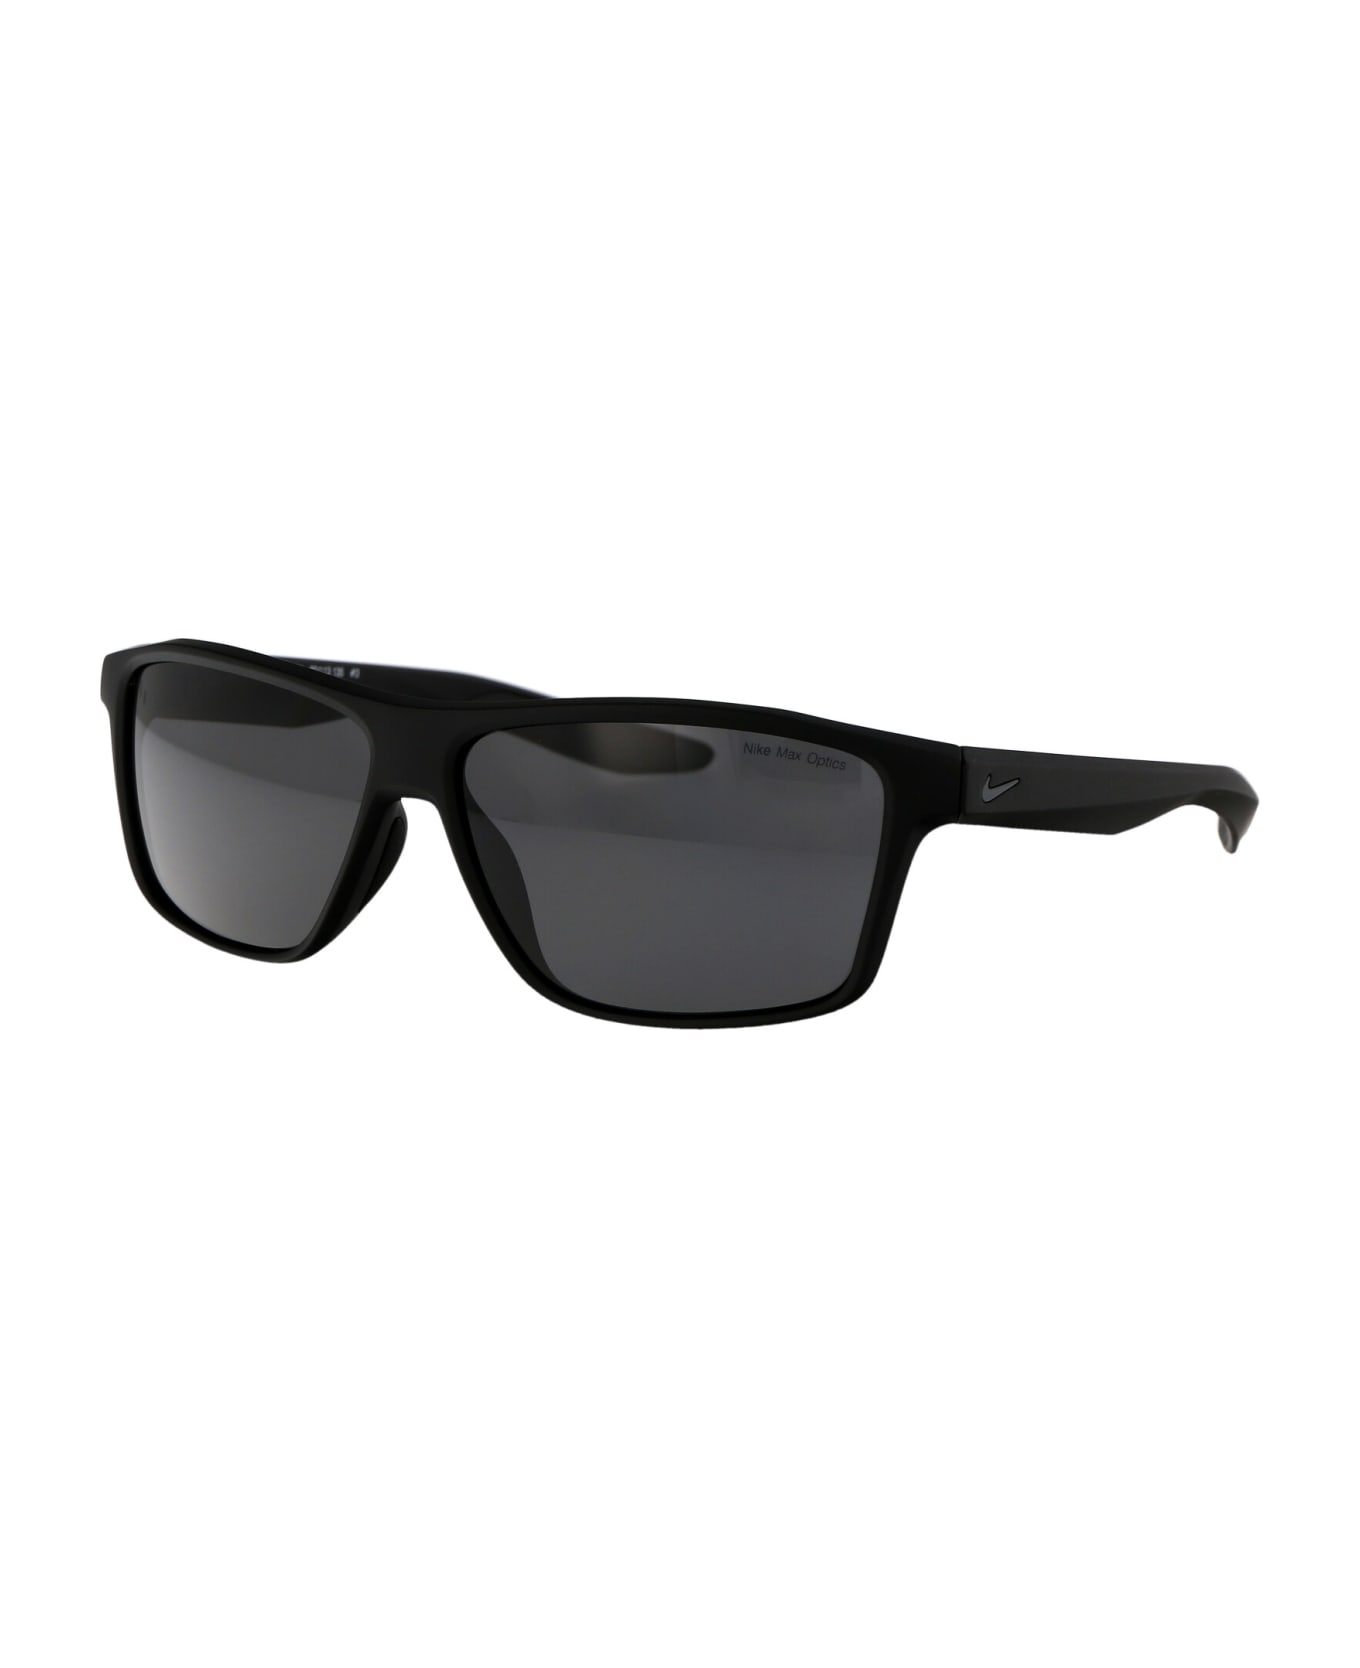 Nike Premier Sunglasses - 001 DARK GREY BLACK/ ANTHRACITE サングラス